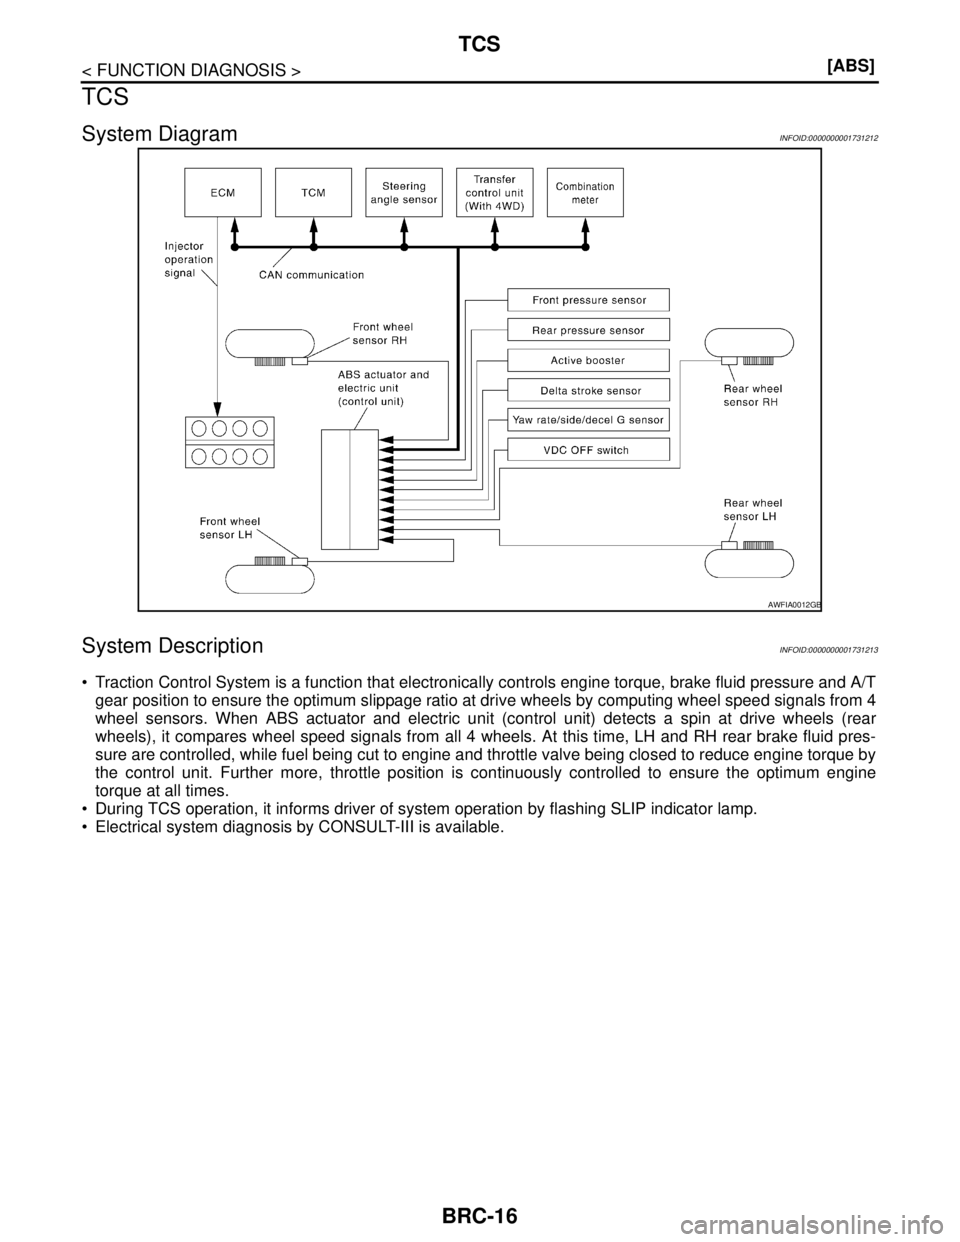 NISSAN TIIDA 2007  Service Repair Manual BRC-16
< FUNCTION DIAGNOSIS >[ABS]
TCS
TCS
System DiagramINFOID:0000000001731212
System DescriptionINFOID:0000000001731213
 Traction Control System is a function that electronically controls engine t